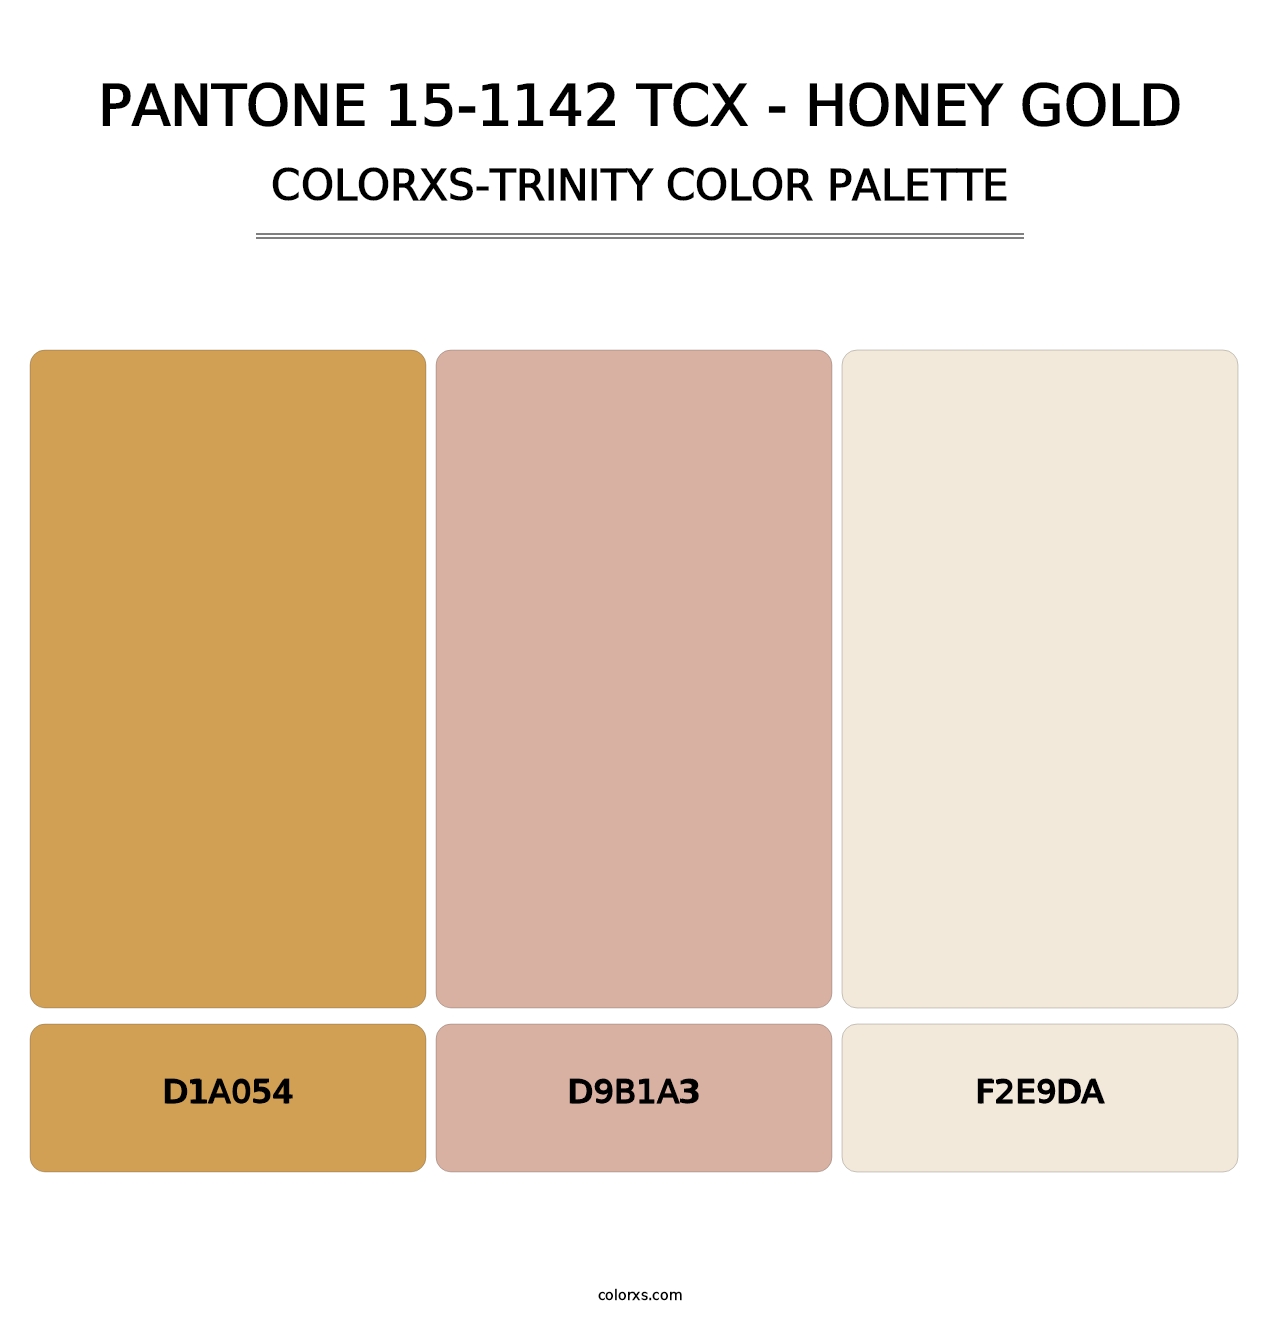 PANTONE 15-1142 TCX - Honey Gold - Colorxs Trinity Palette